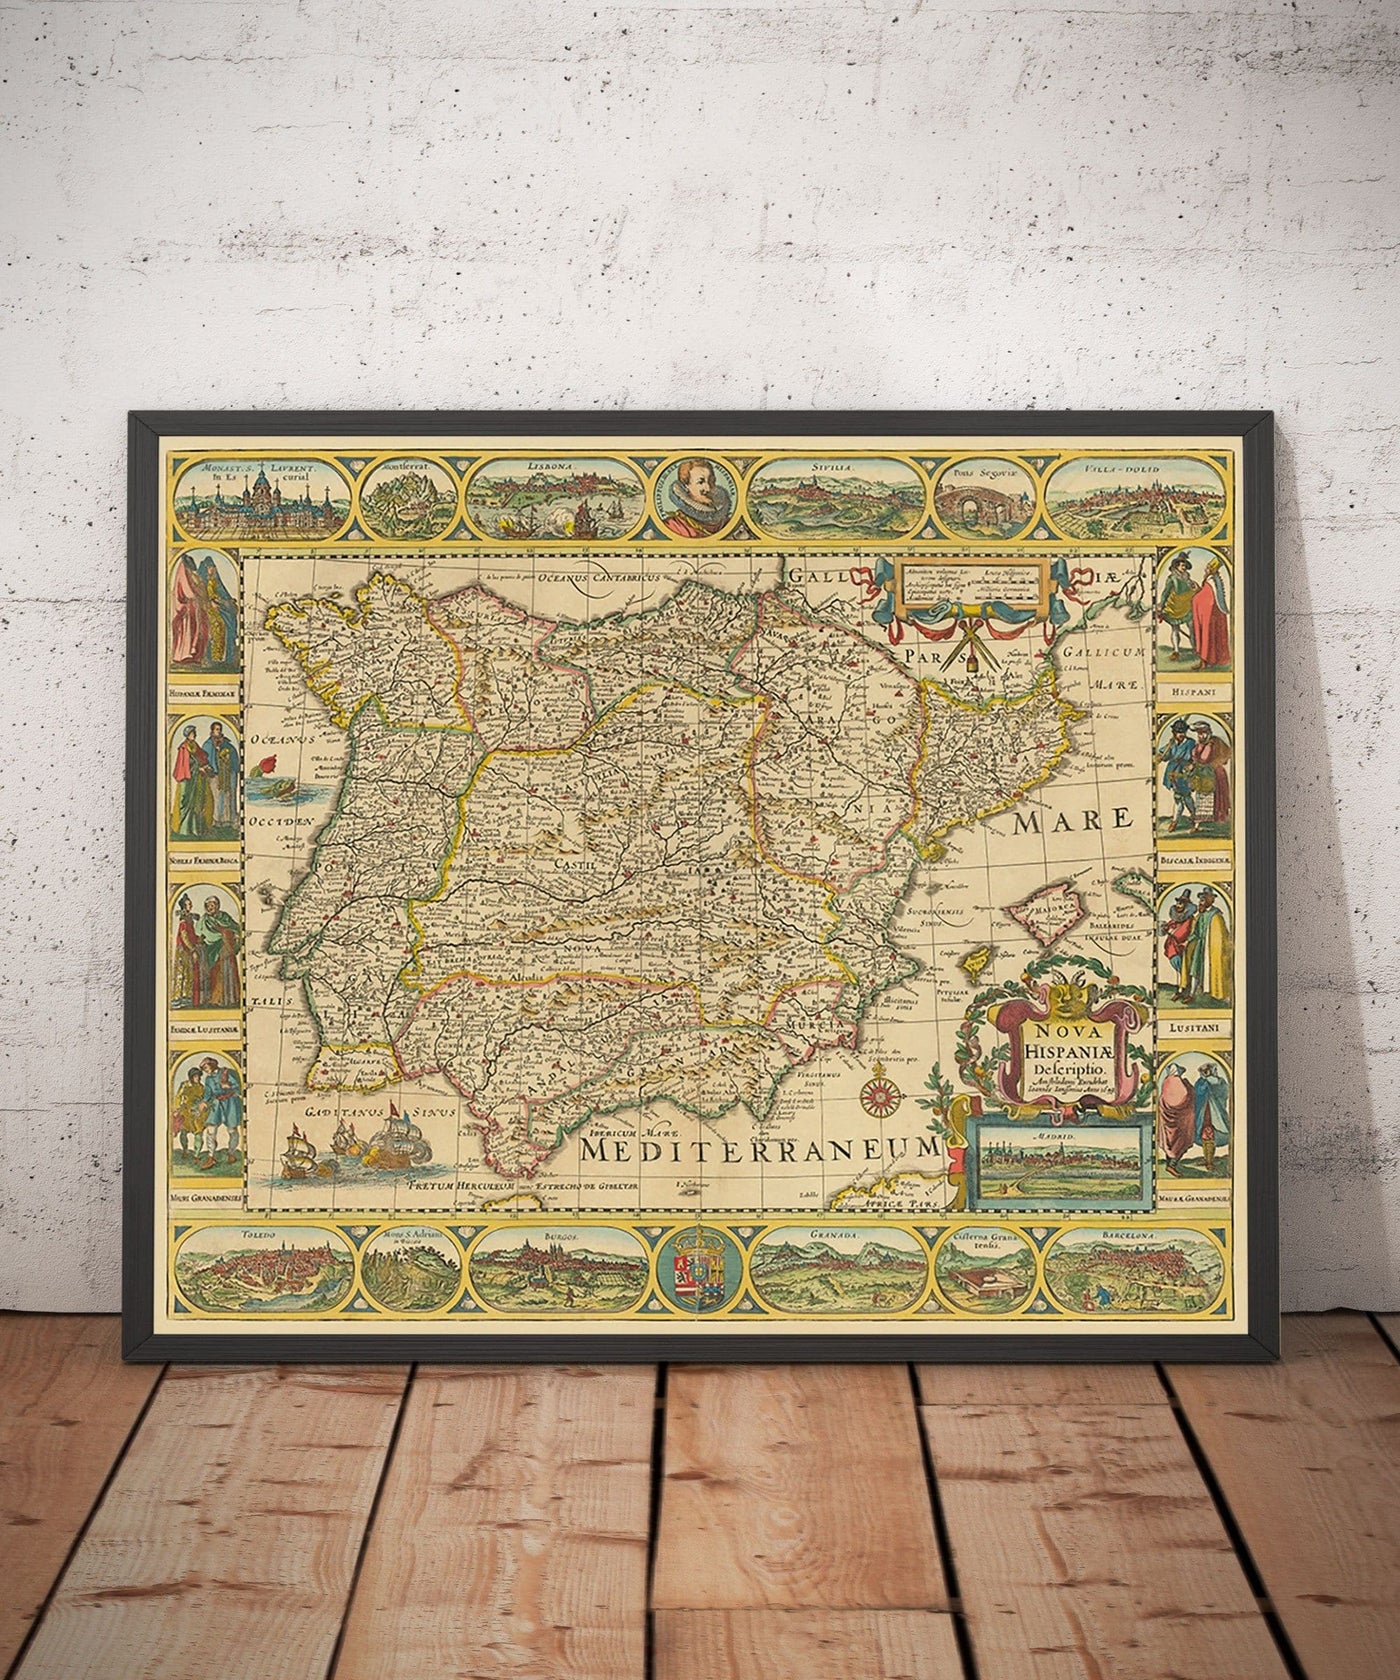 Mapa antiguo de España y Portugal, 1659 por Jan Jansson - Madrid, Lisboa, Barcelona, Cataluña, Valencia, Iberia, Mar Mediterráneo